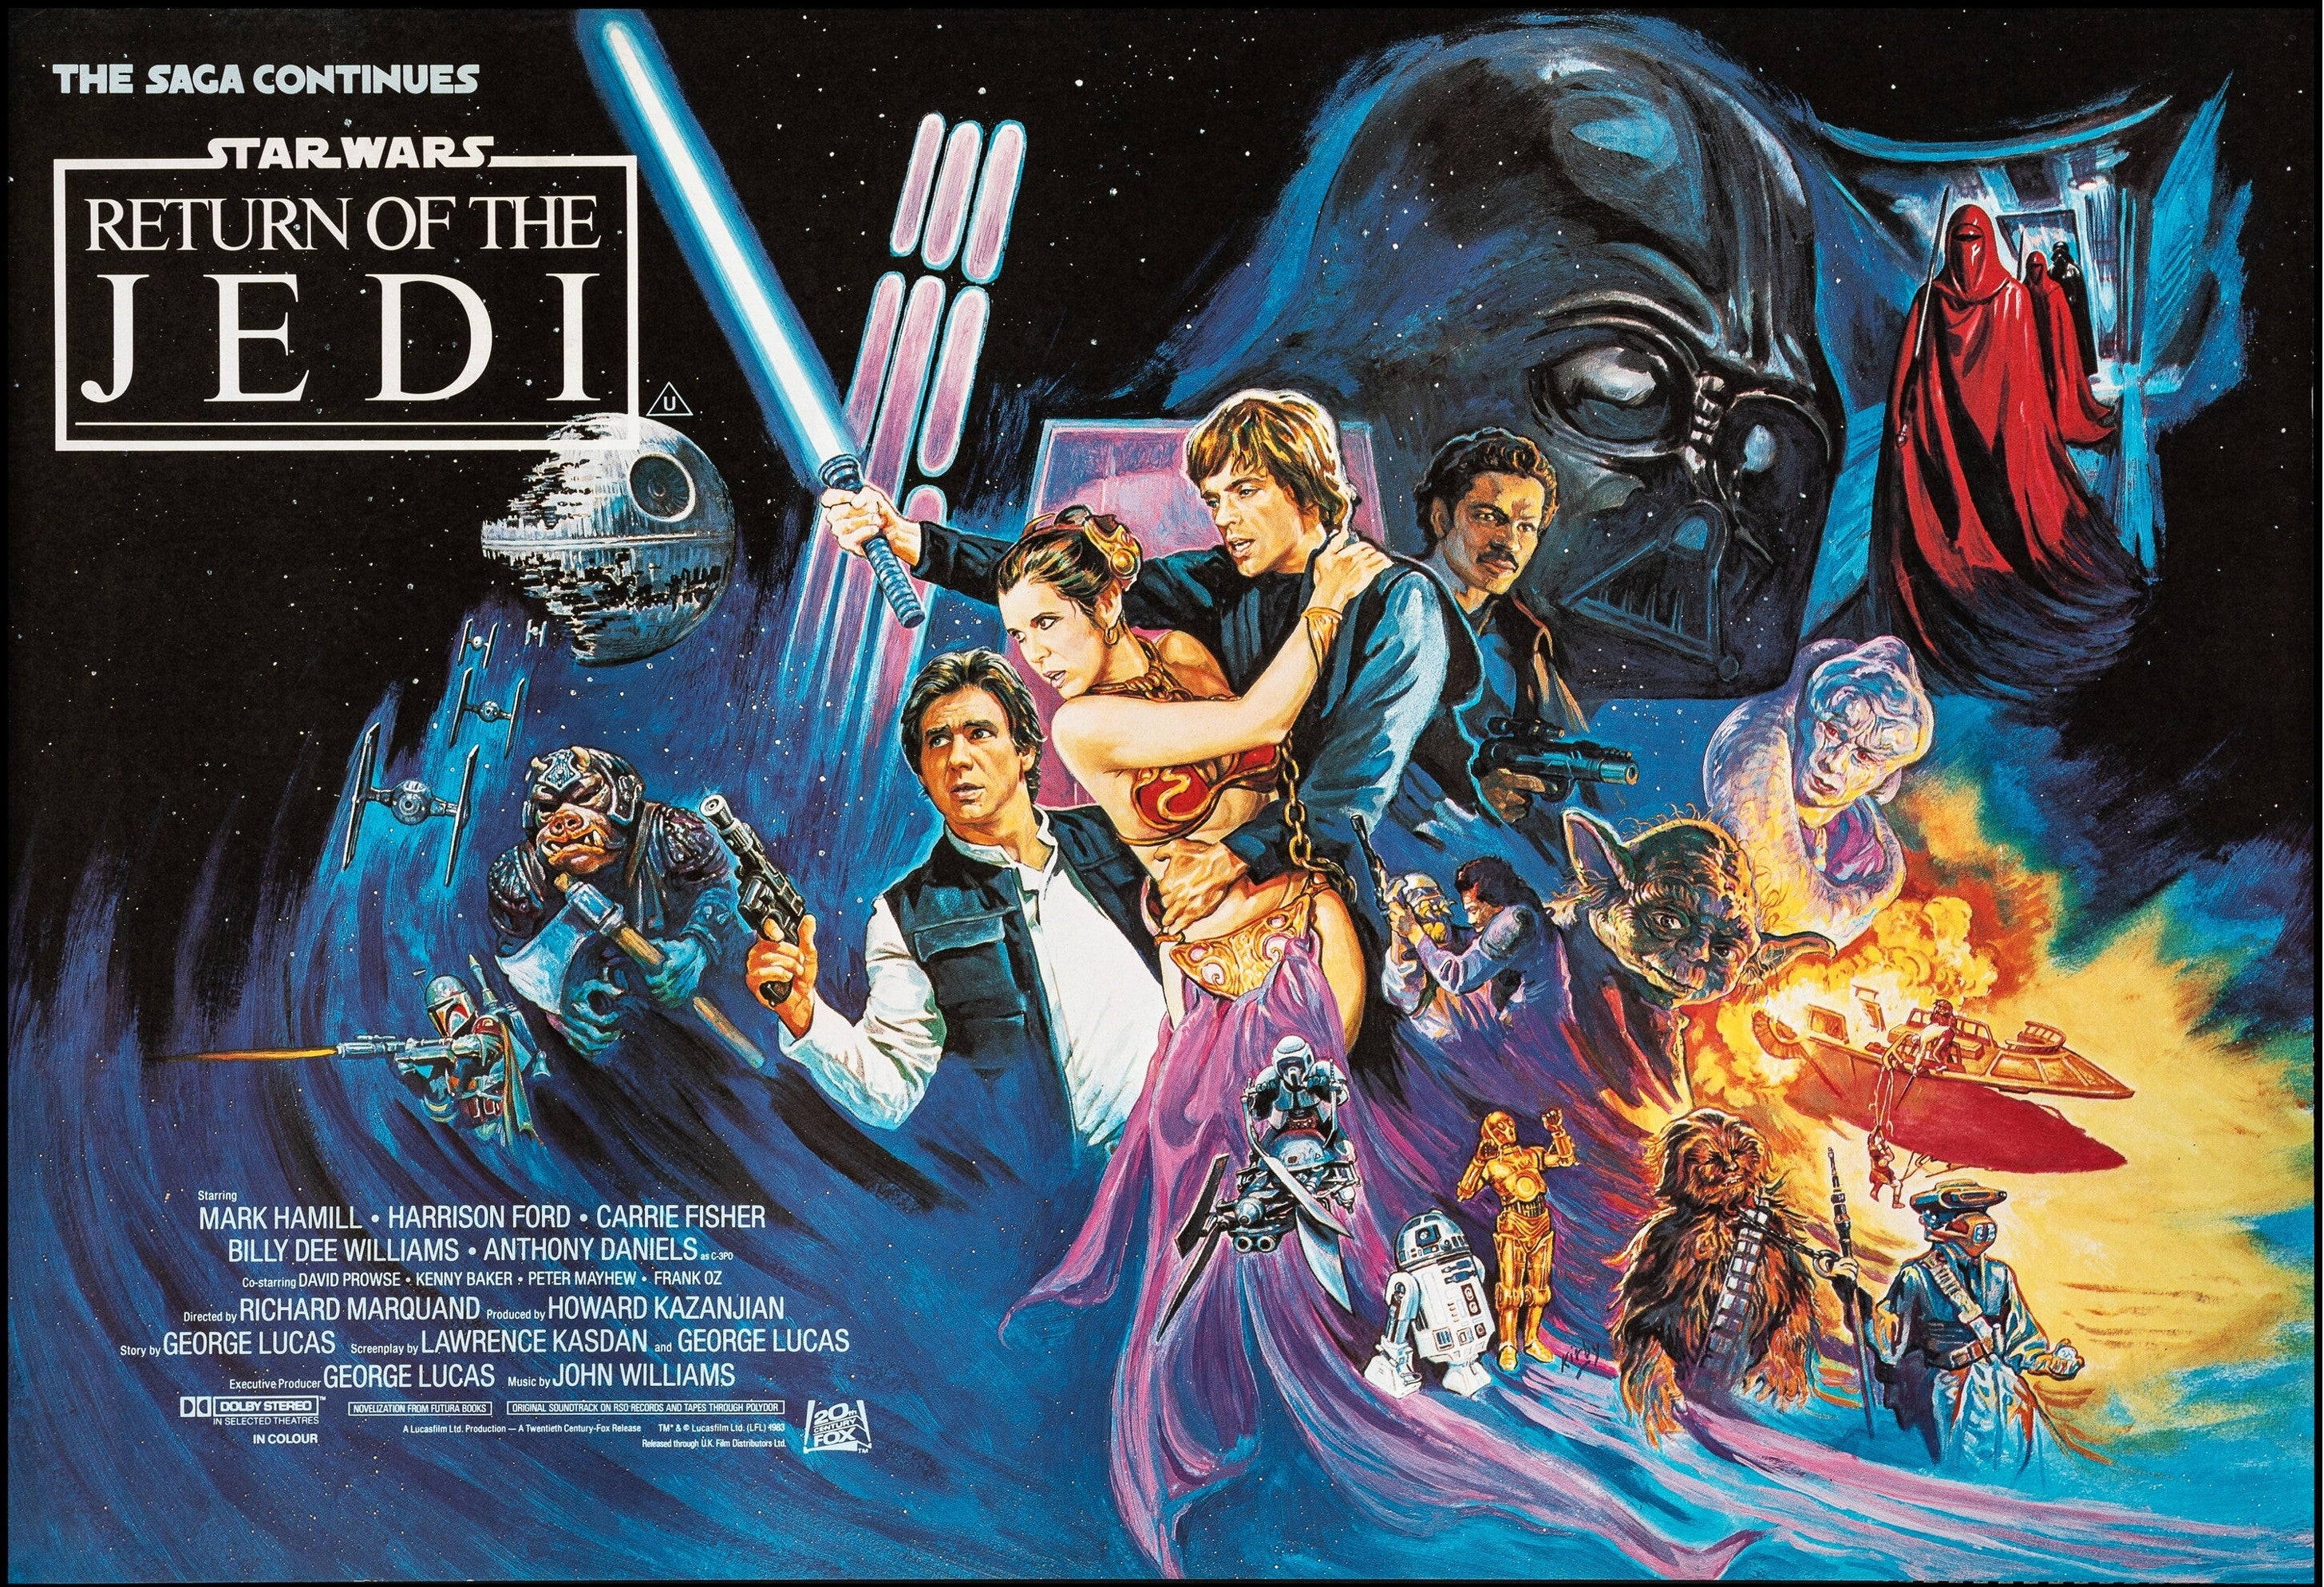 STAR WARS: EPISODE VI - RETURN OF THE JEDI (1983)